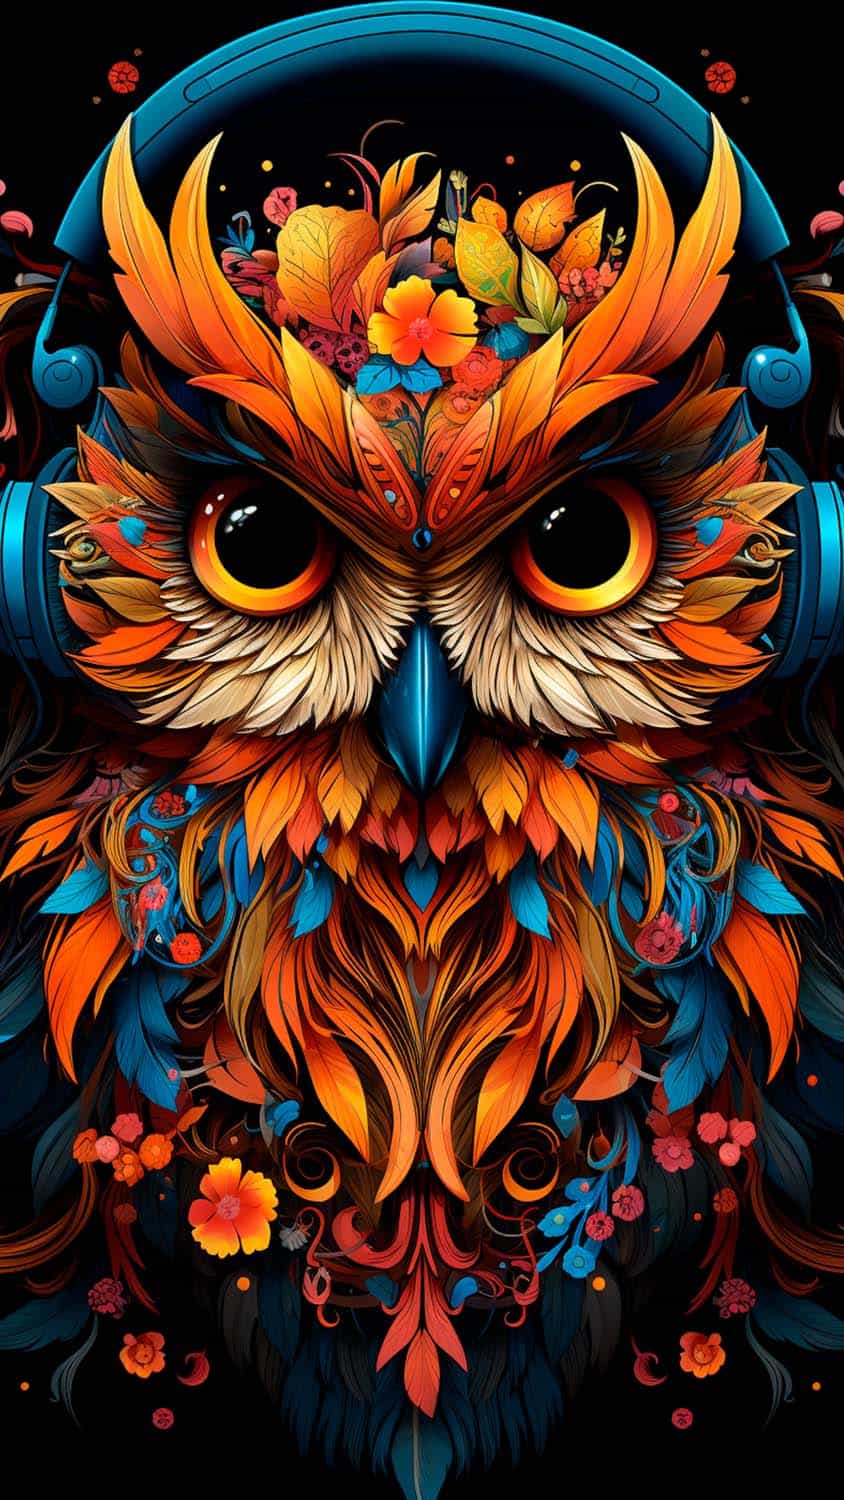 Owl Digital Art iPhone Wallpaper 4K